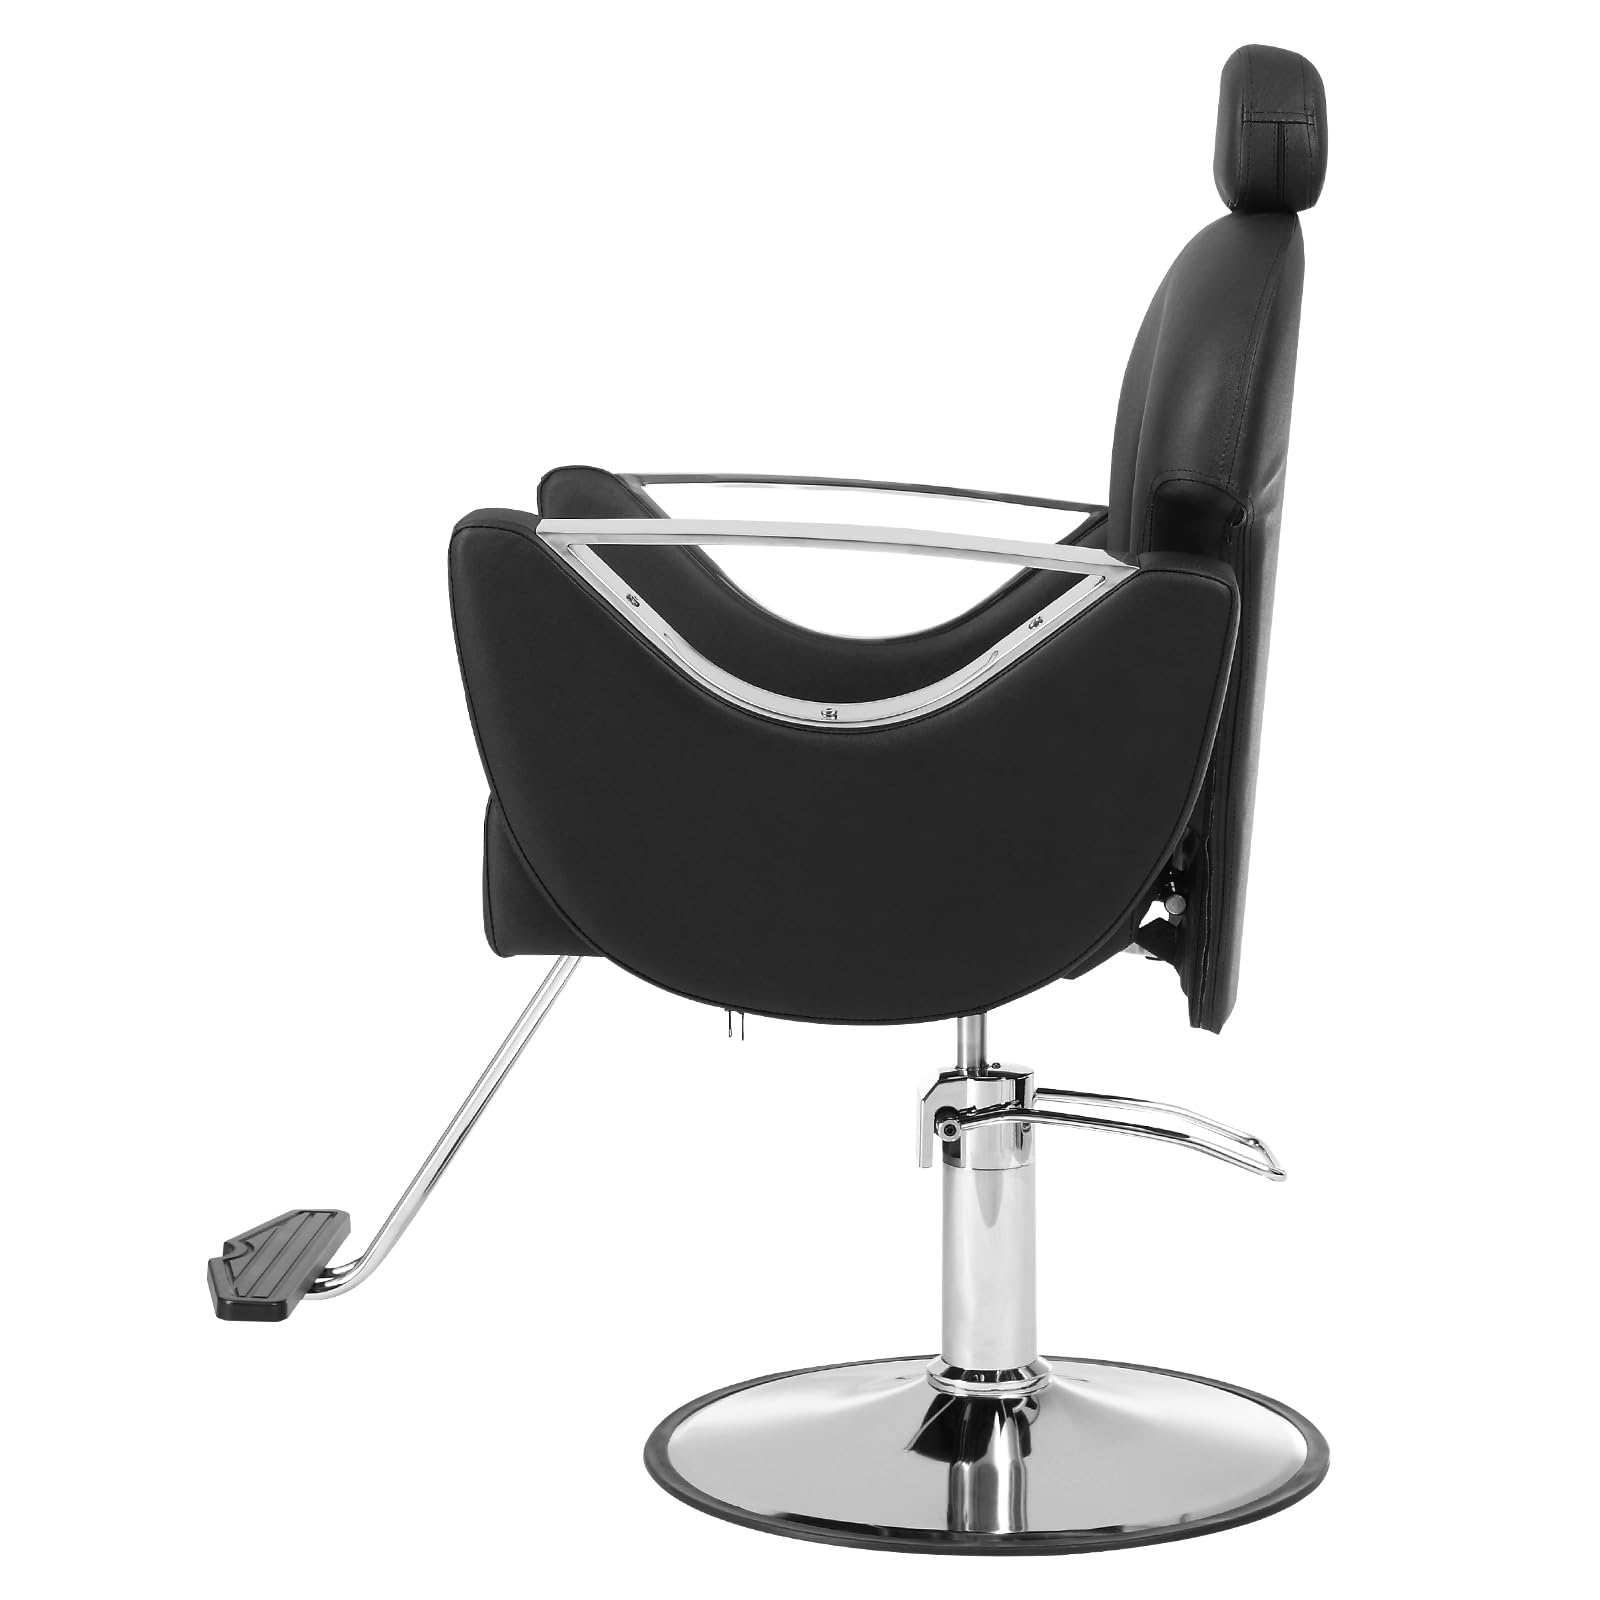 VEVOR Hydraulic Barber Hair Stylist, 360 Degrees Swivel 90°-130° Reclining Salon Chair for Beauty Spa Shampoo, Max Load Weight 330 lbs, Black